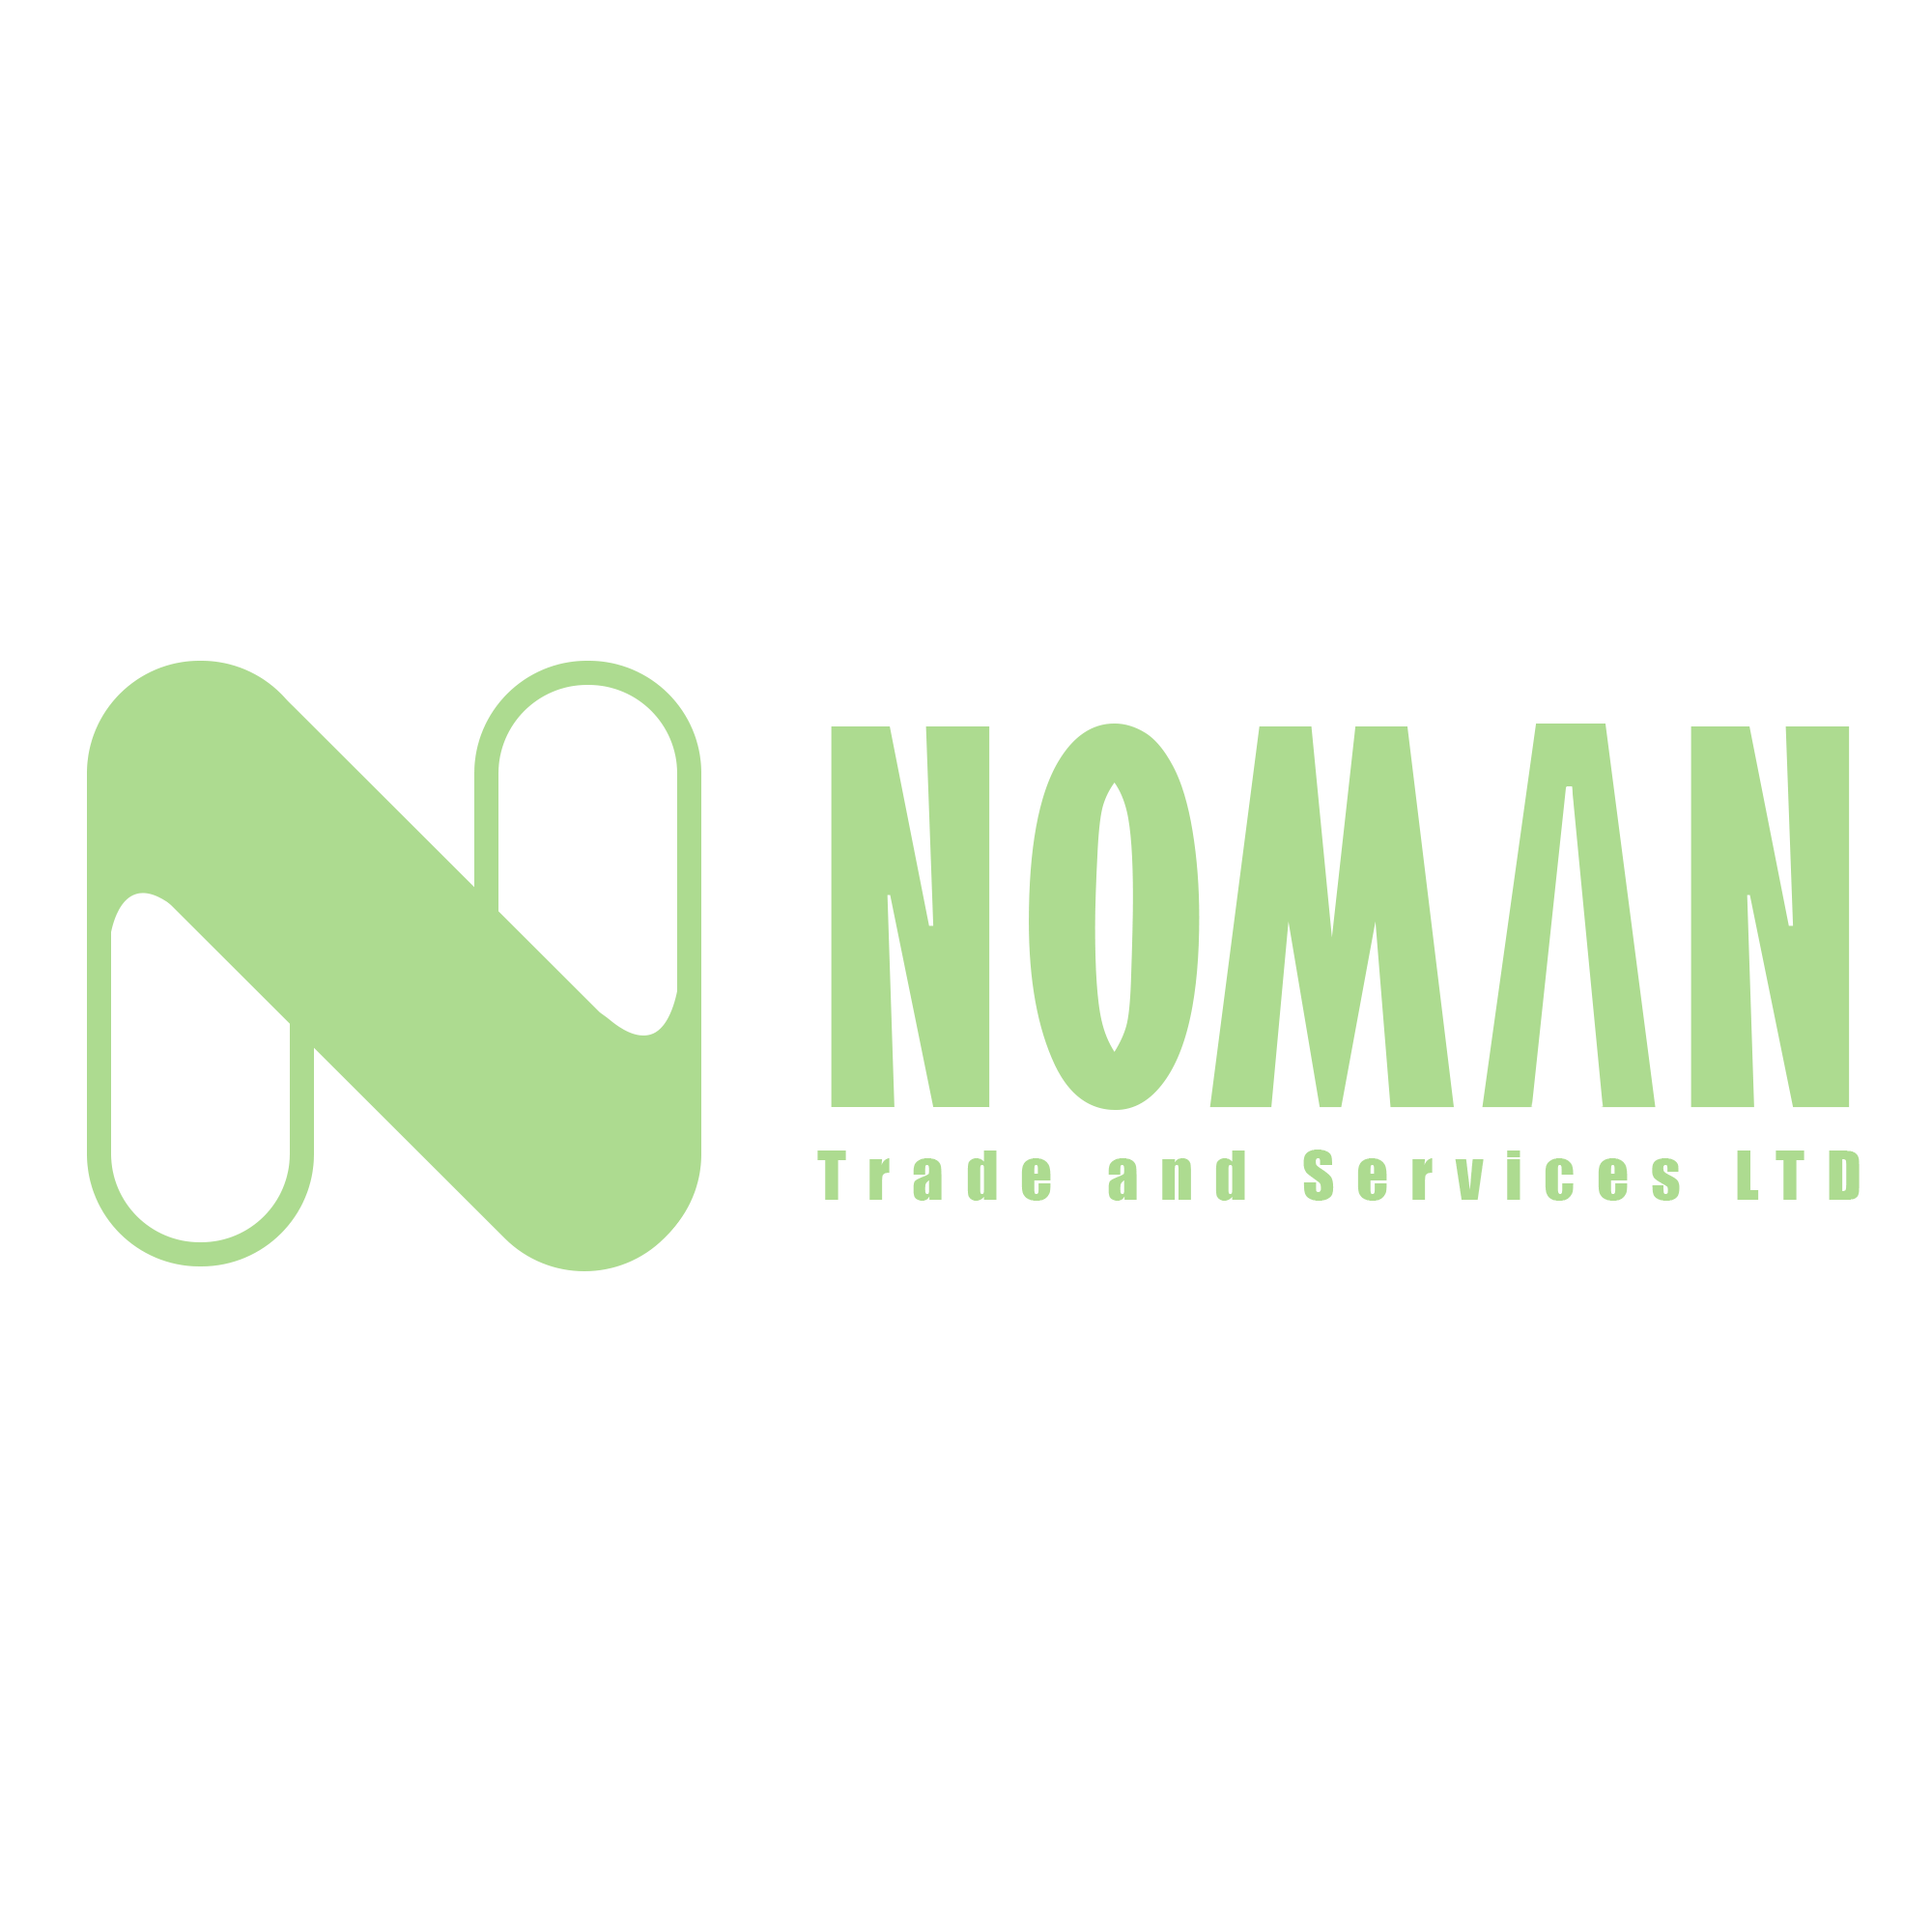 Noman Trade and Services LTD